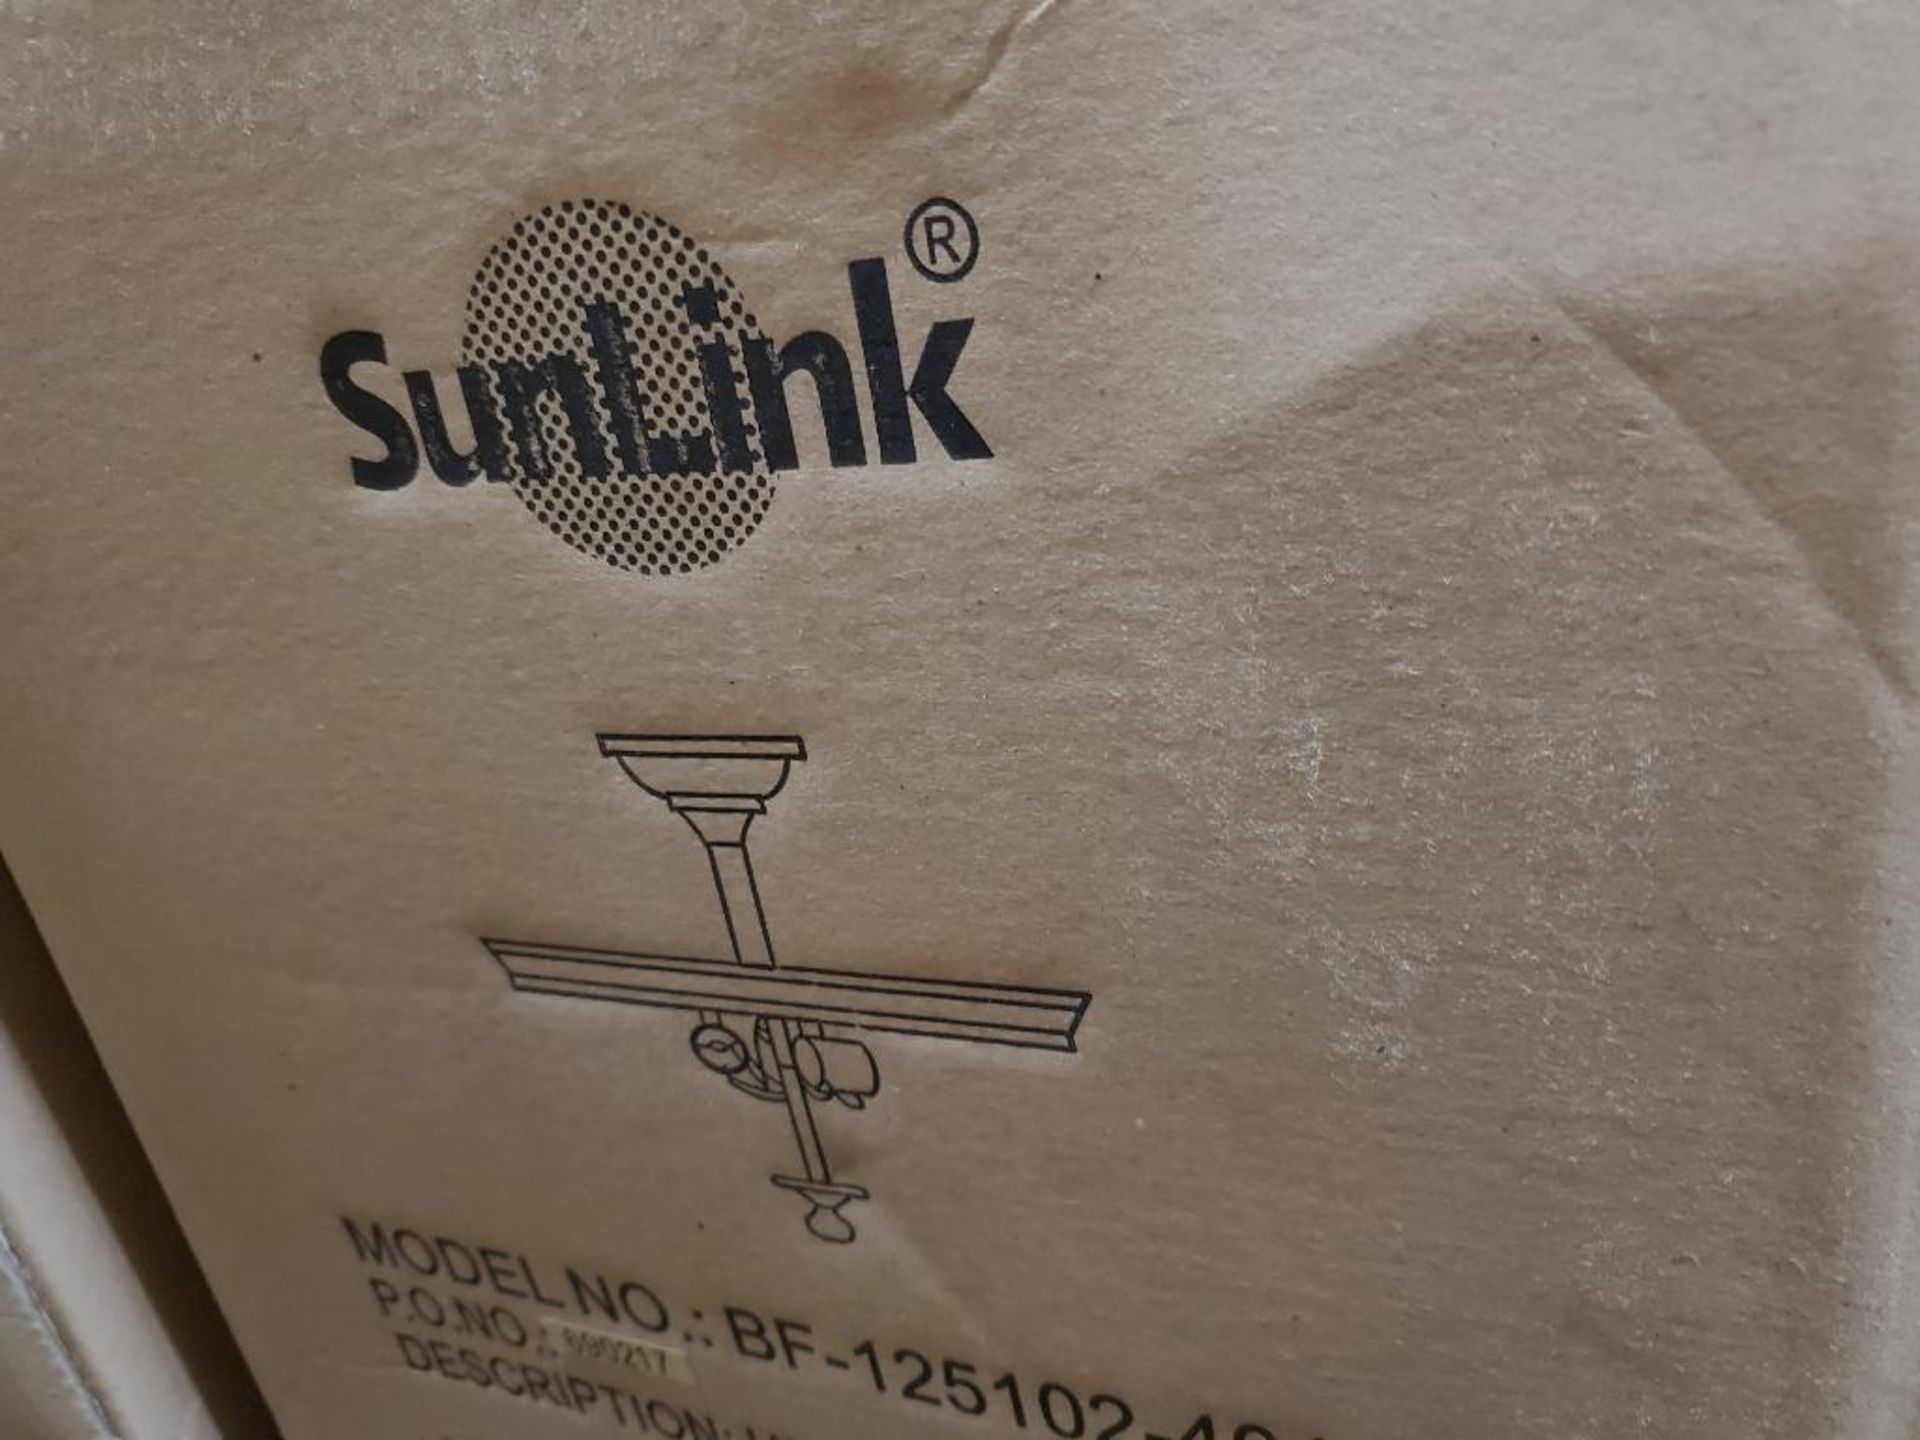 Qty 144 - SunLink 120 volt 3-bulb light. Part #BF-125102-401. New in bulk box. - Image 9 of 9